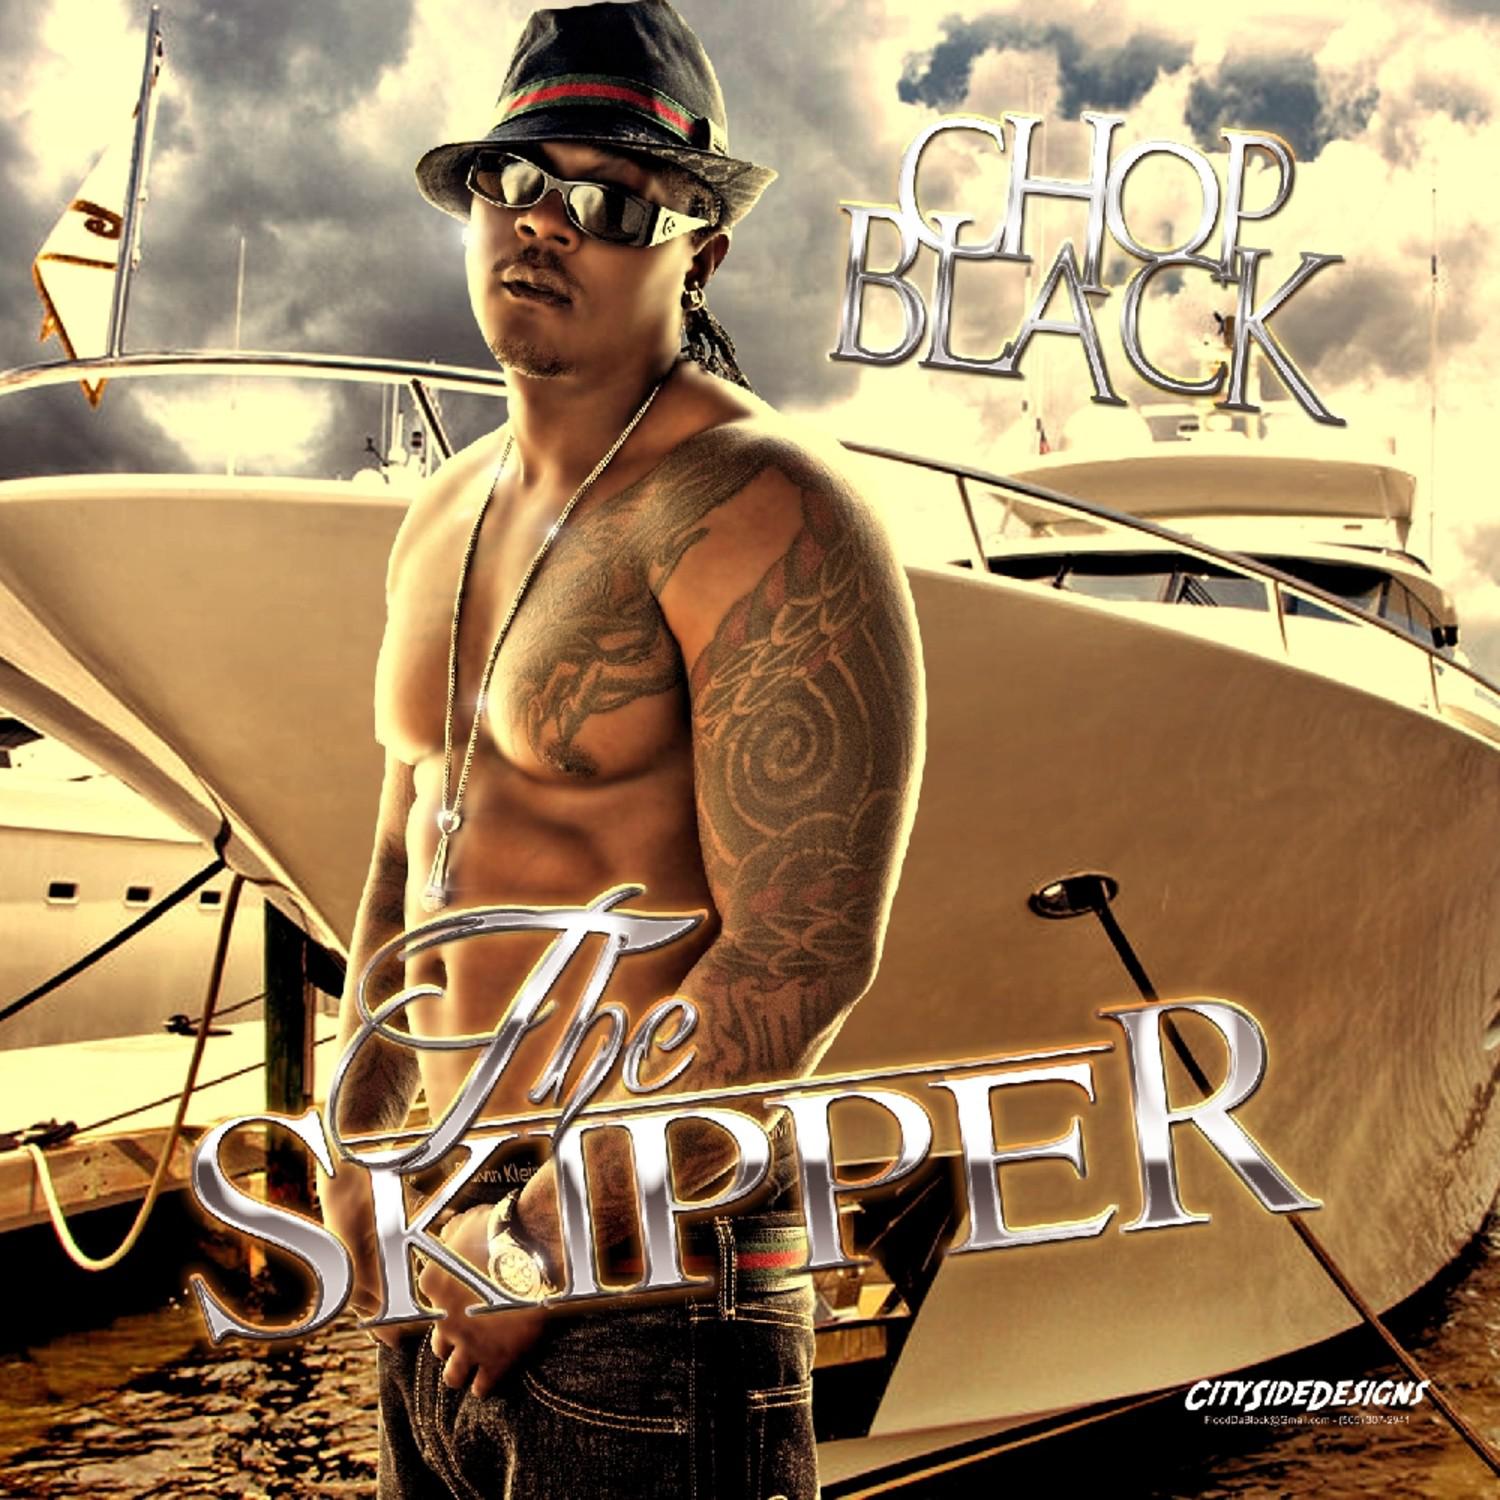 The Skipper